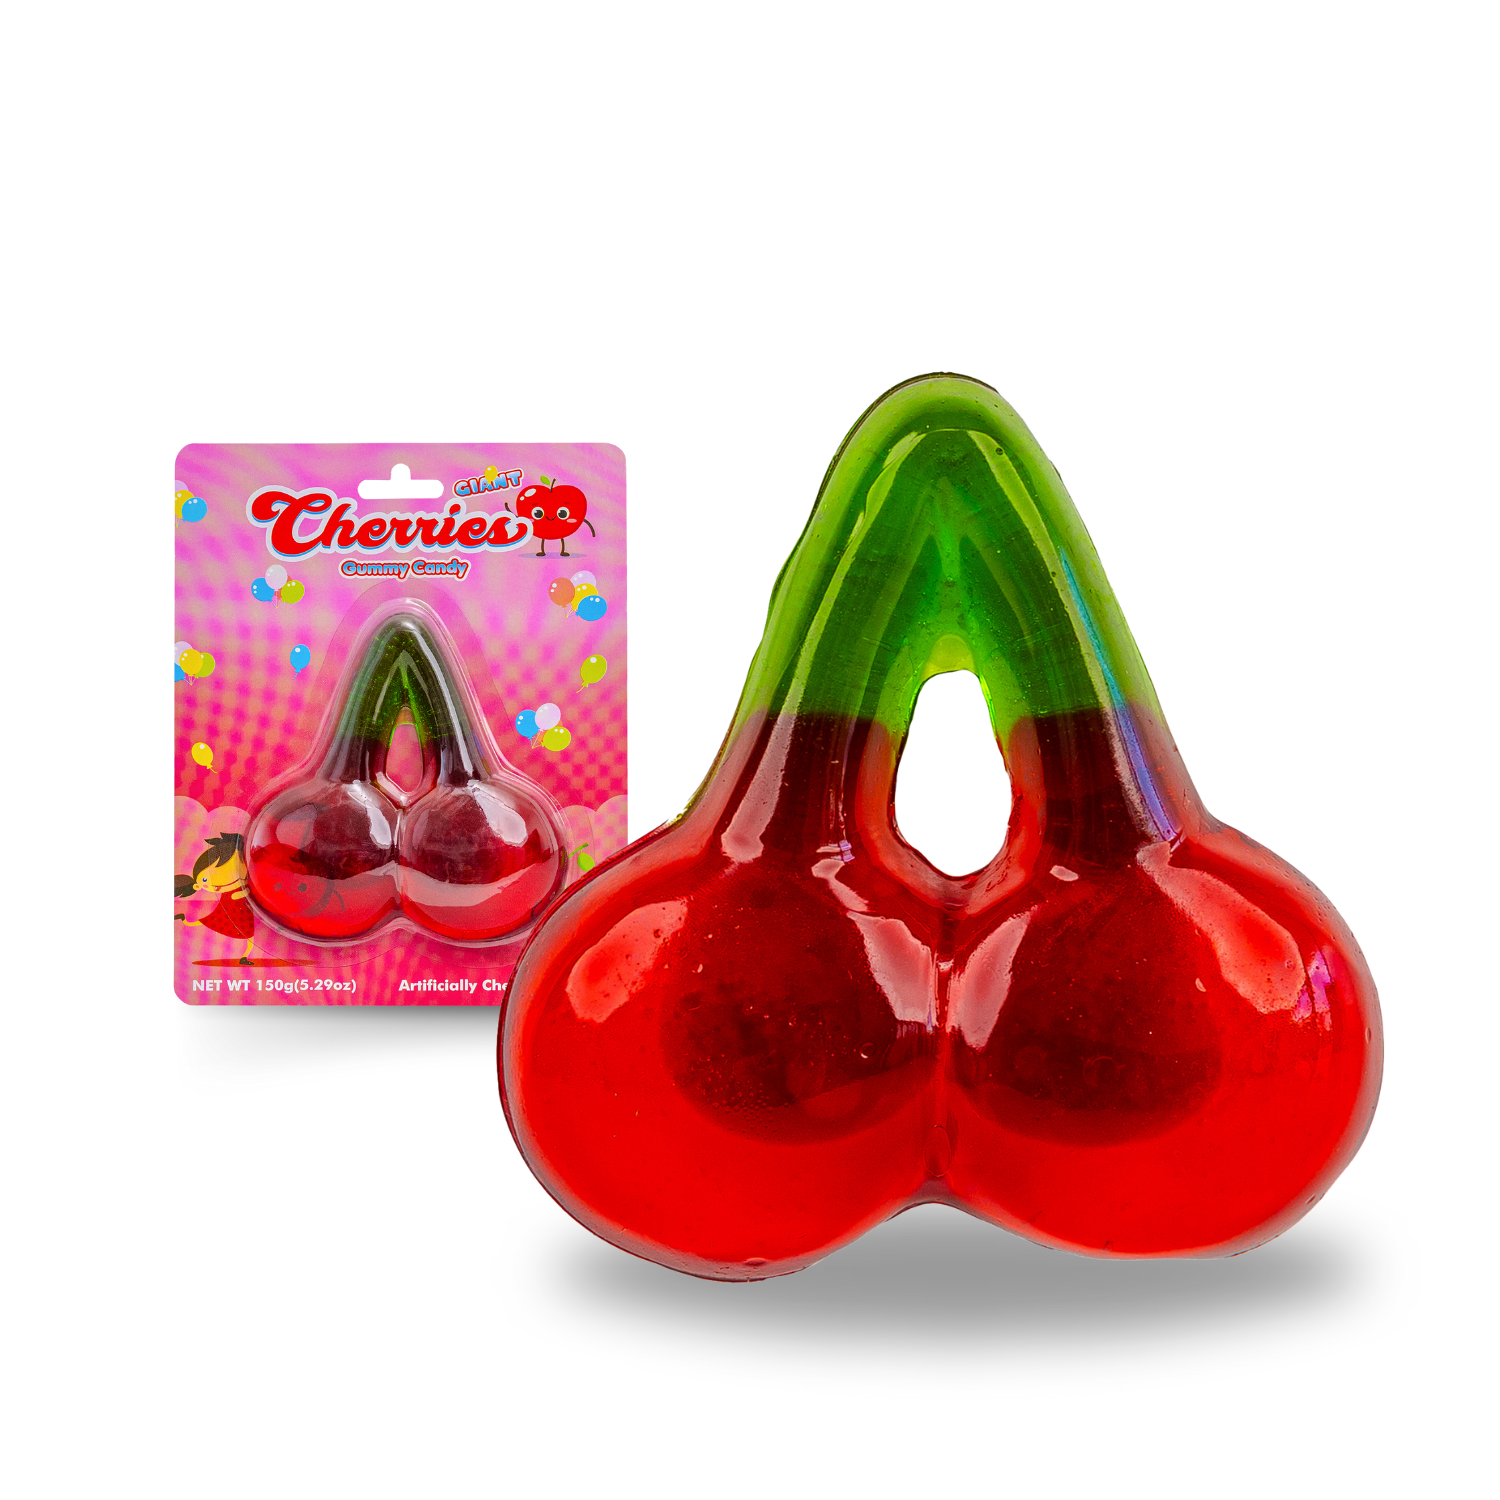 Giant Gummy Cherries - 5oz